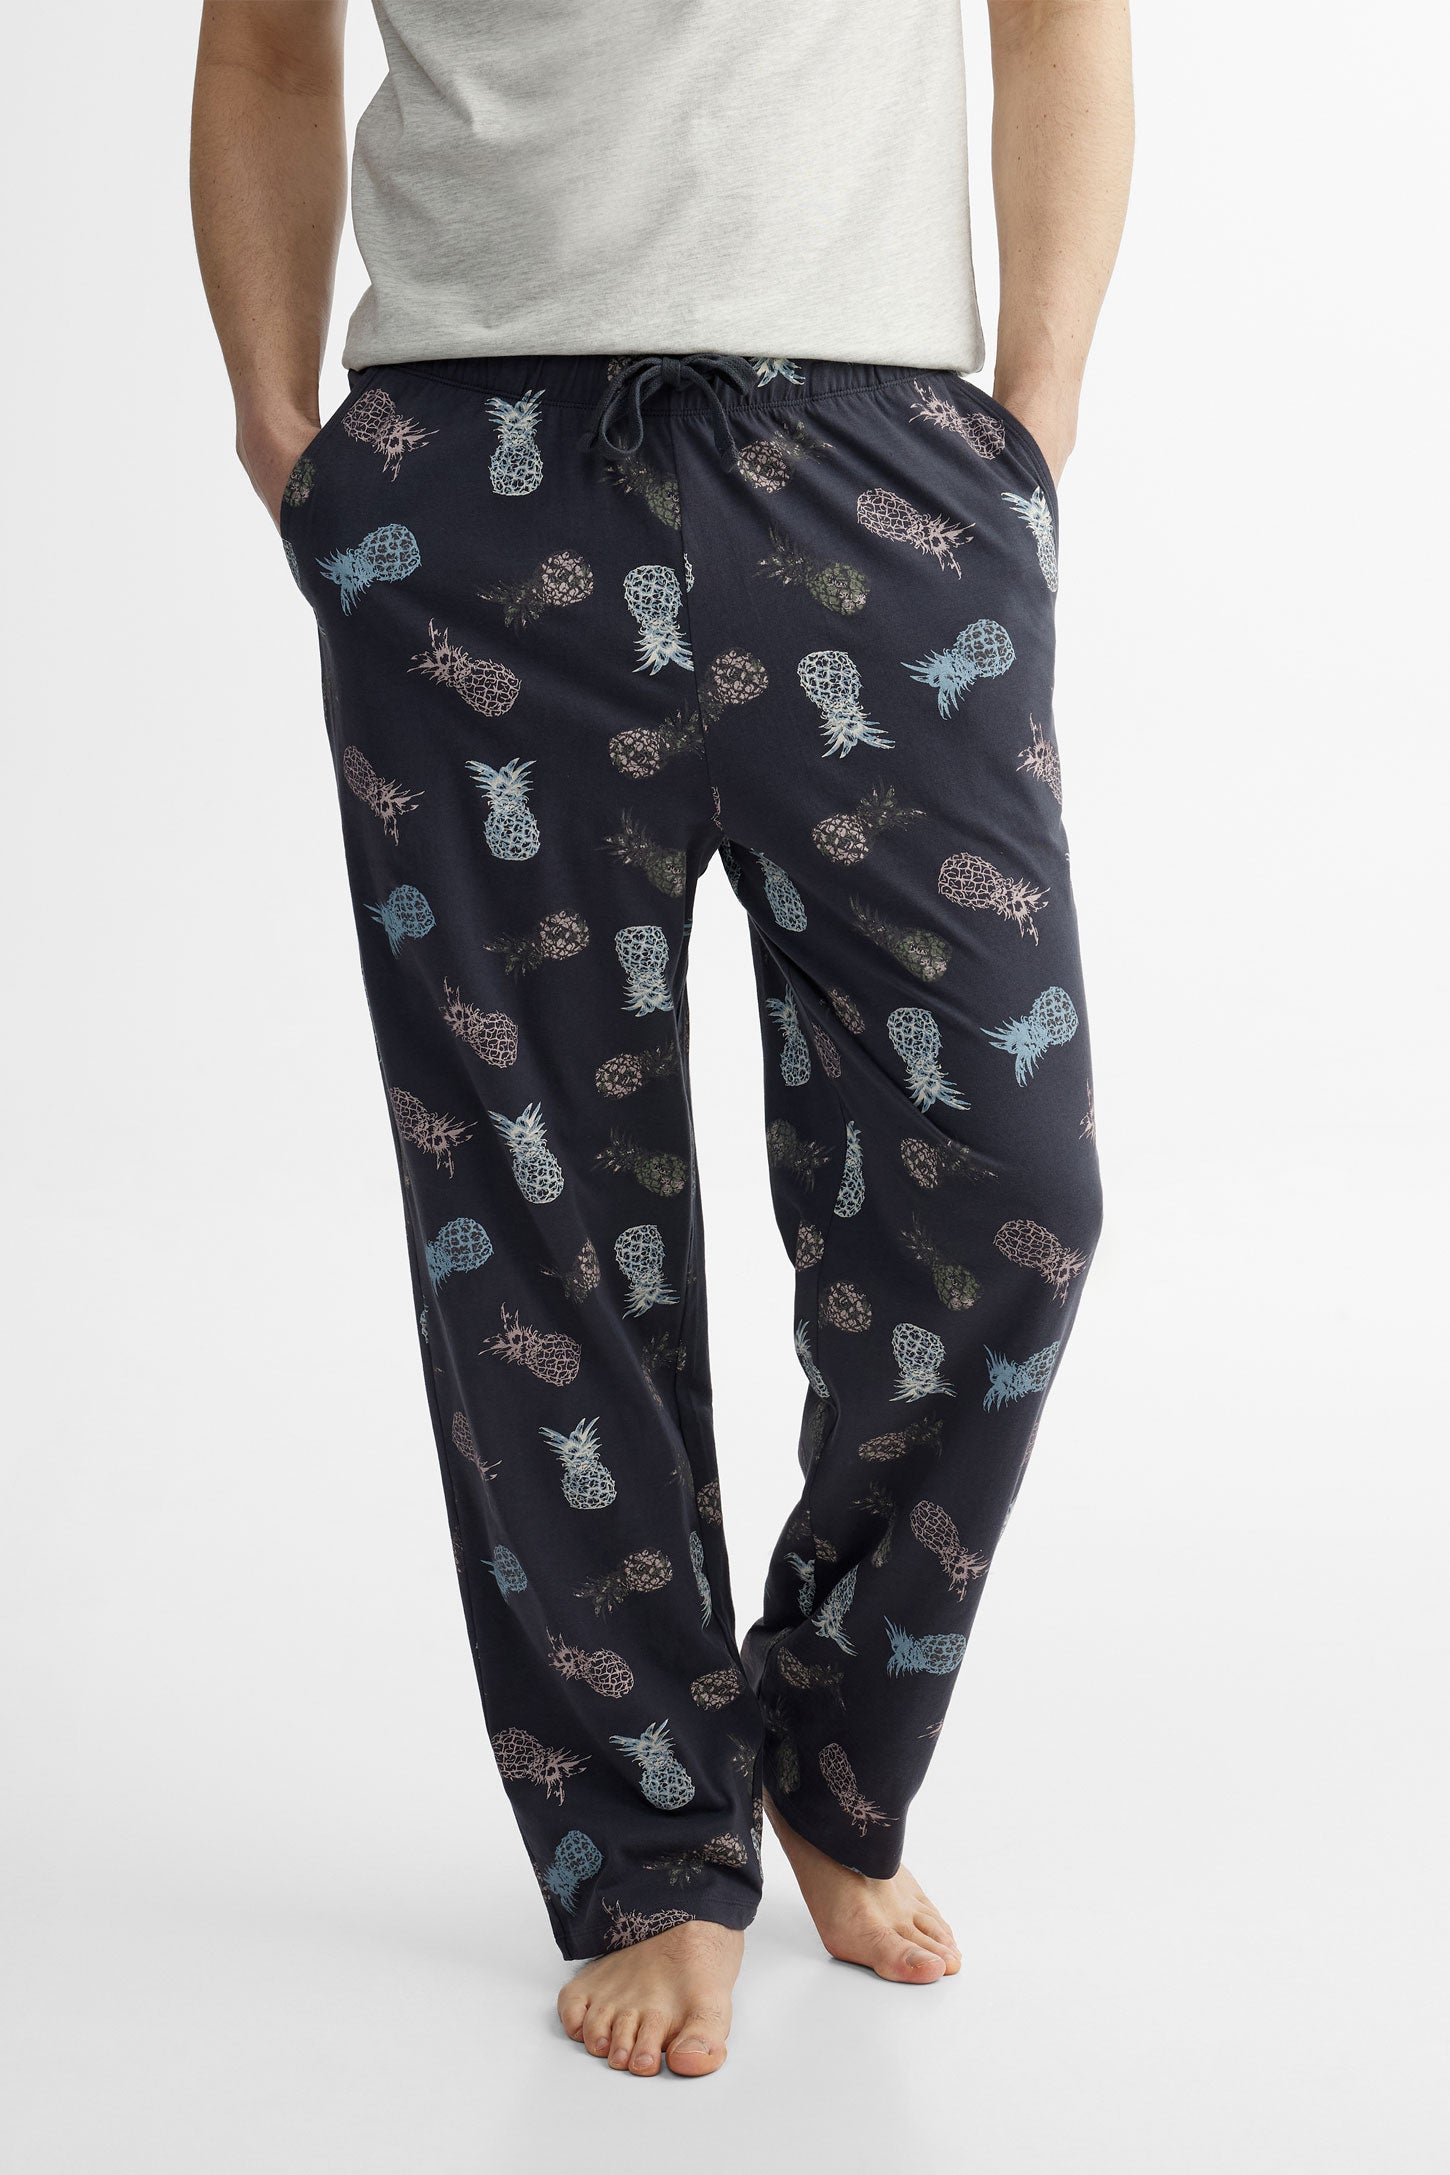 Pantalon pyjama en coton, 2/40$ - Homme && MAUVE/MULTI